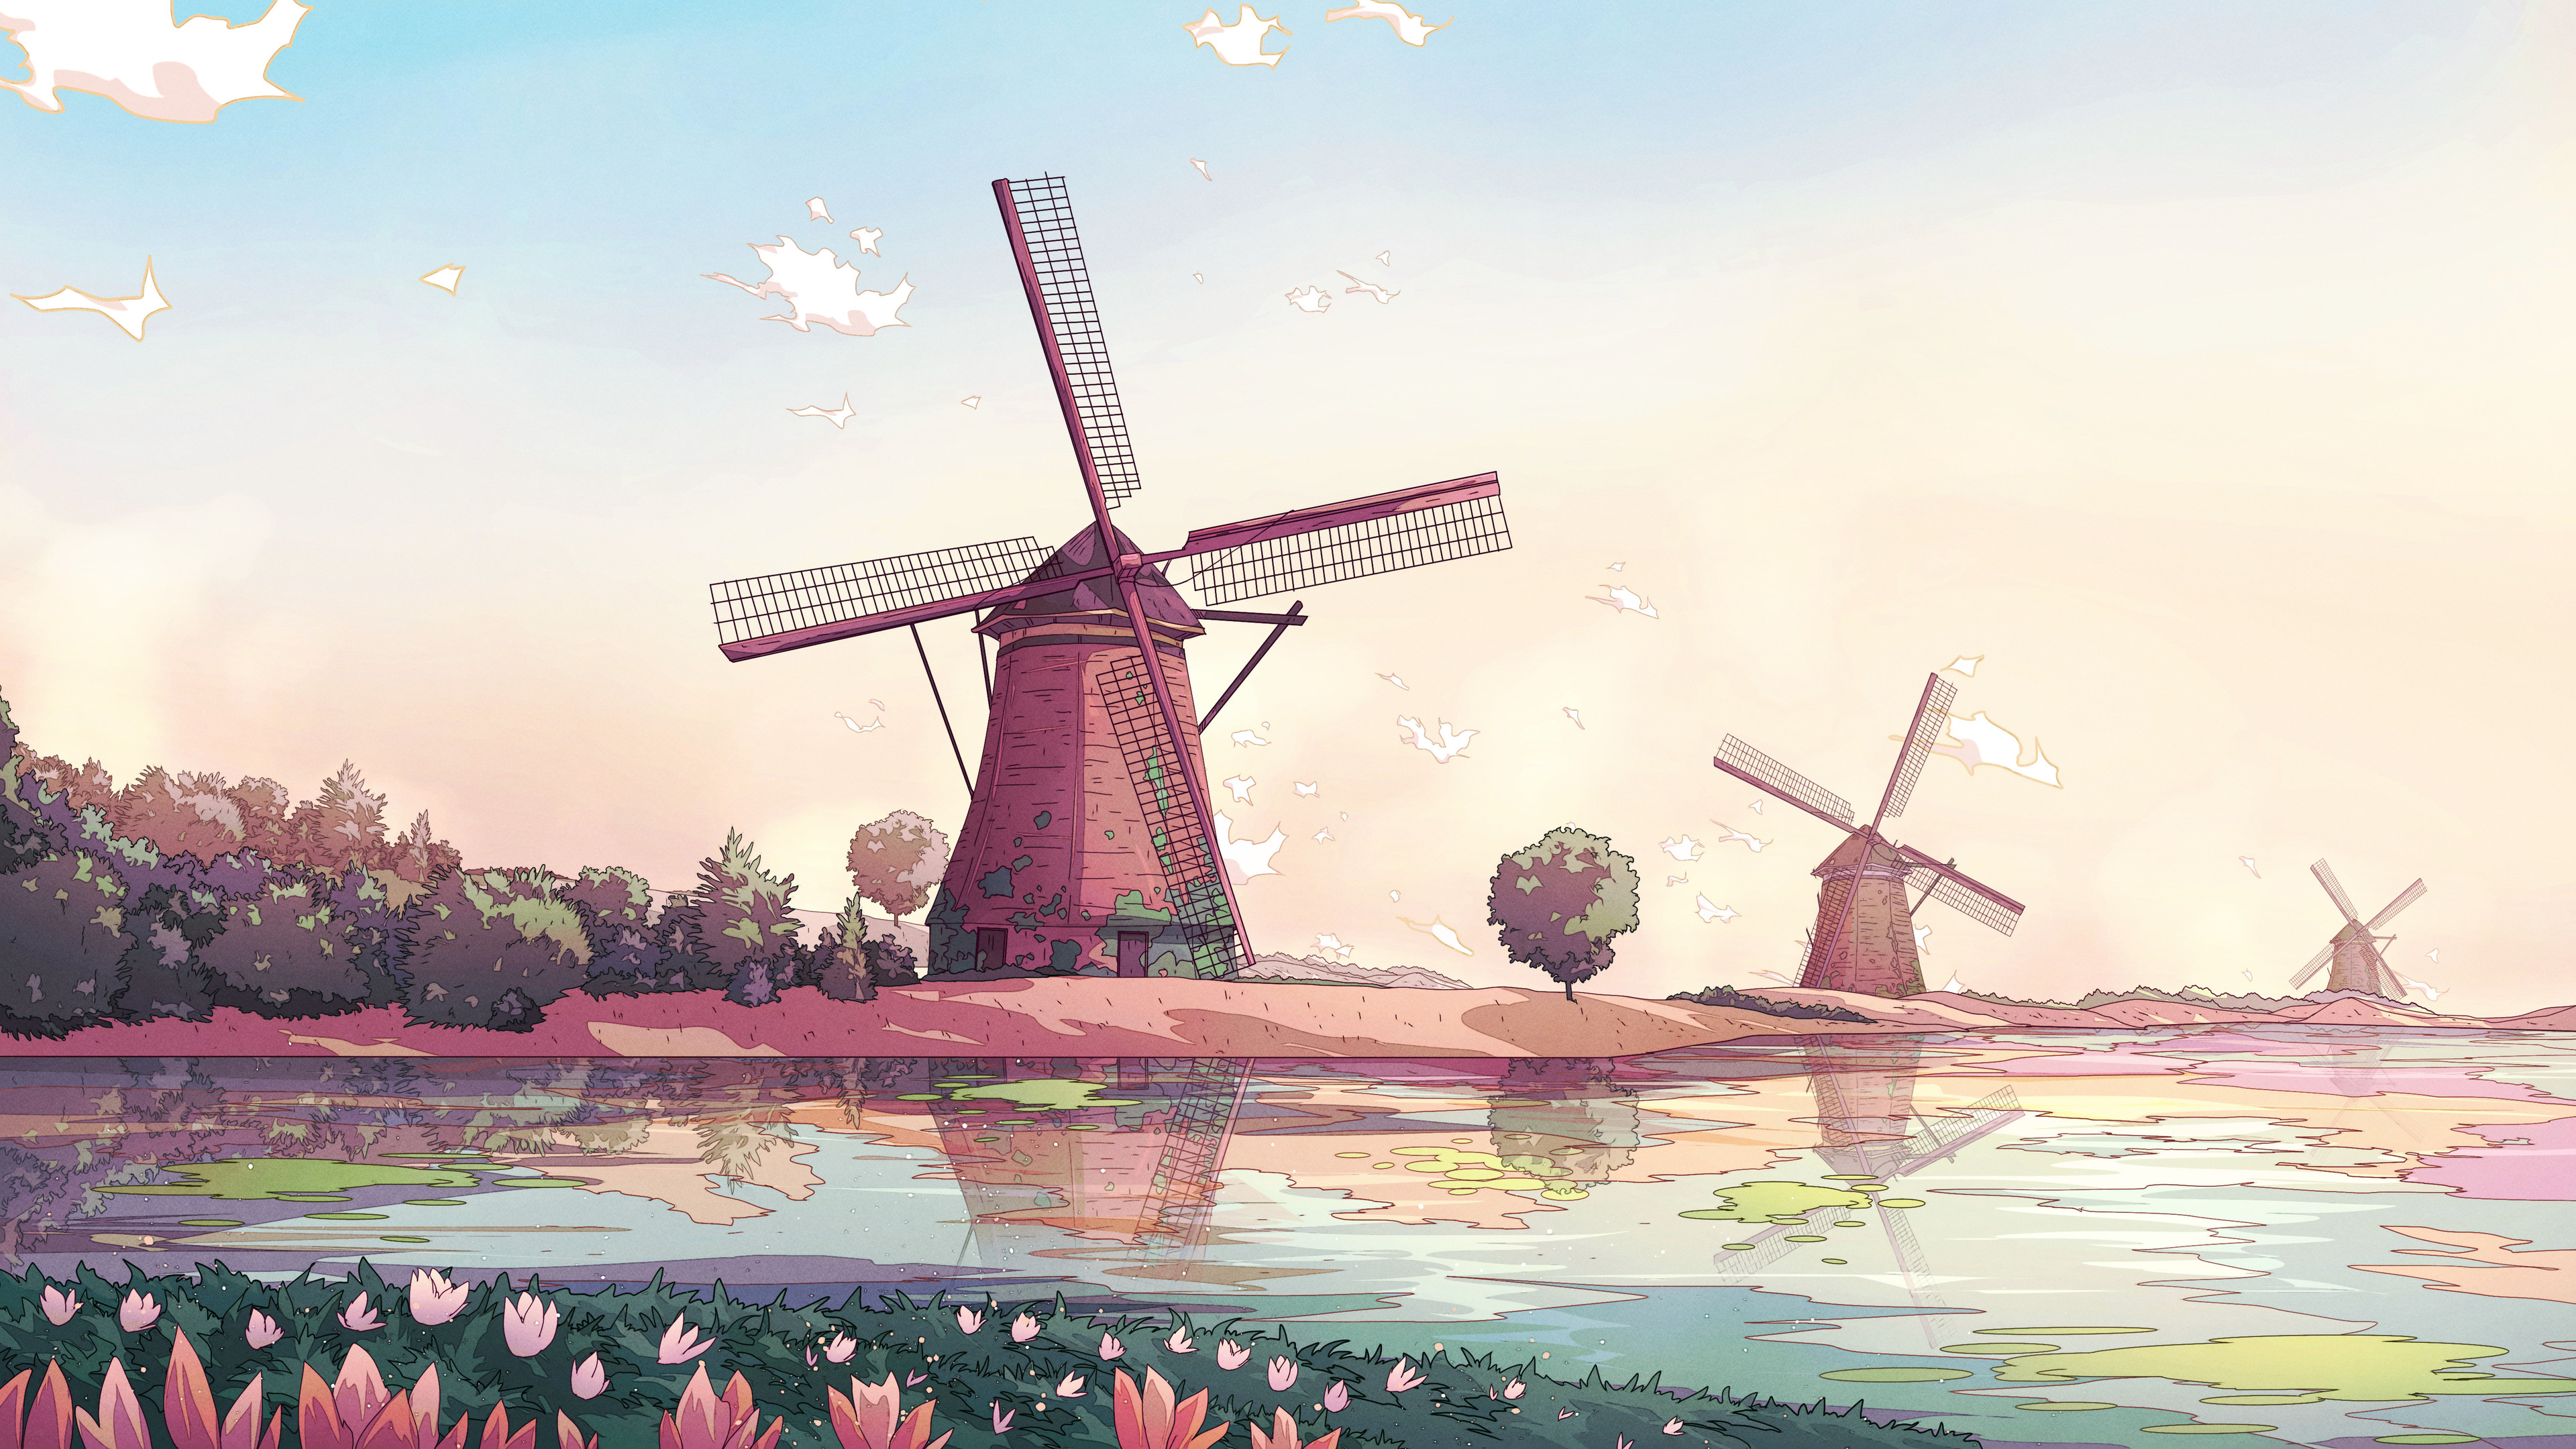 Christian Benavides Digital Art Fantasy Art Windmill Don Quijote Reflection River Clouds Landscape A 3840x2160